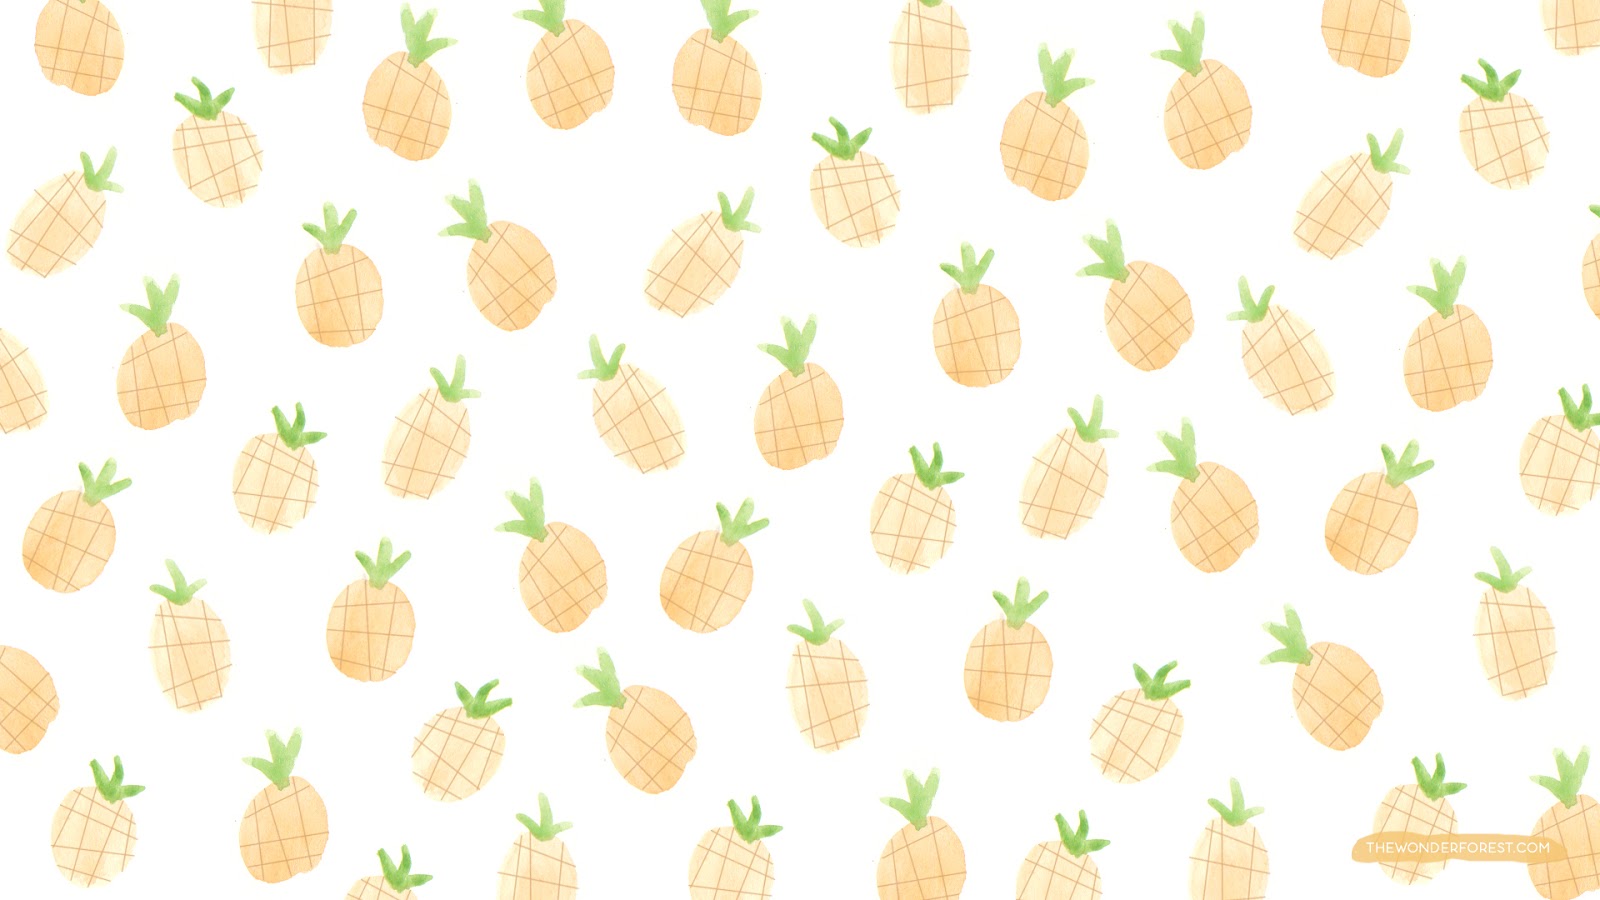  wallpers pina anana favim com 2154699 pineapple wallpaper patterns